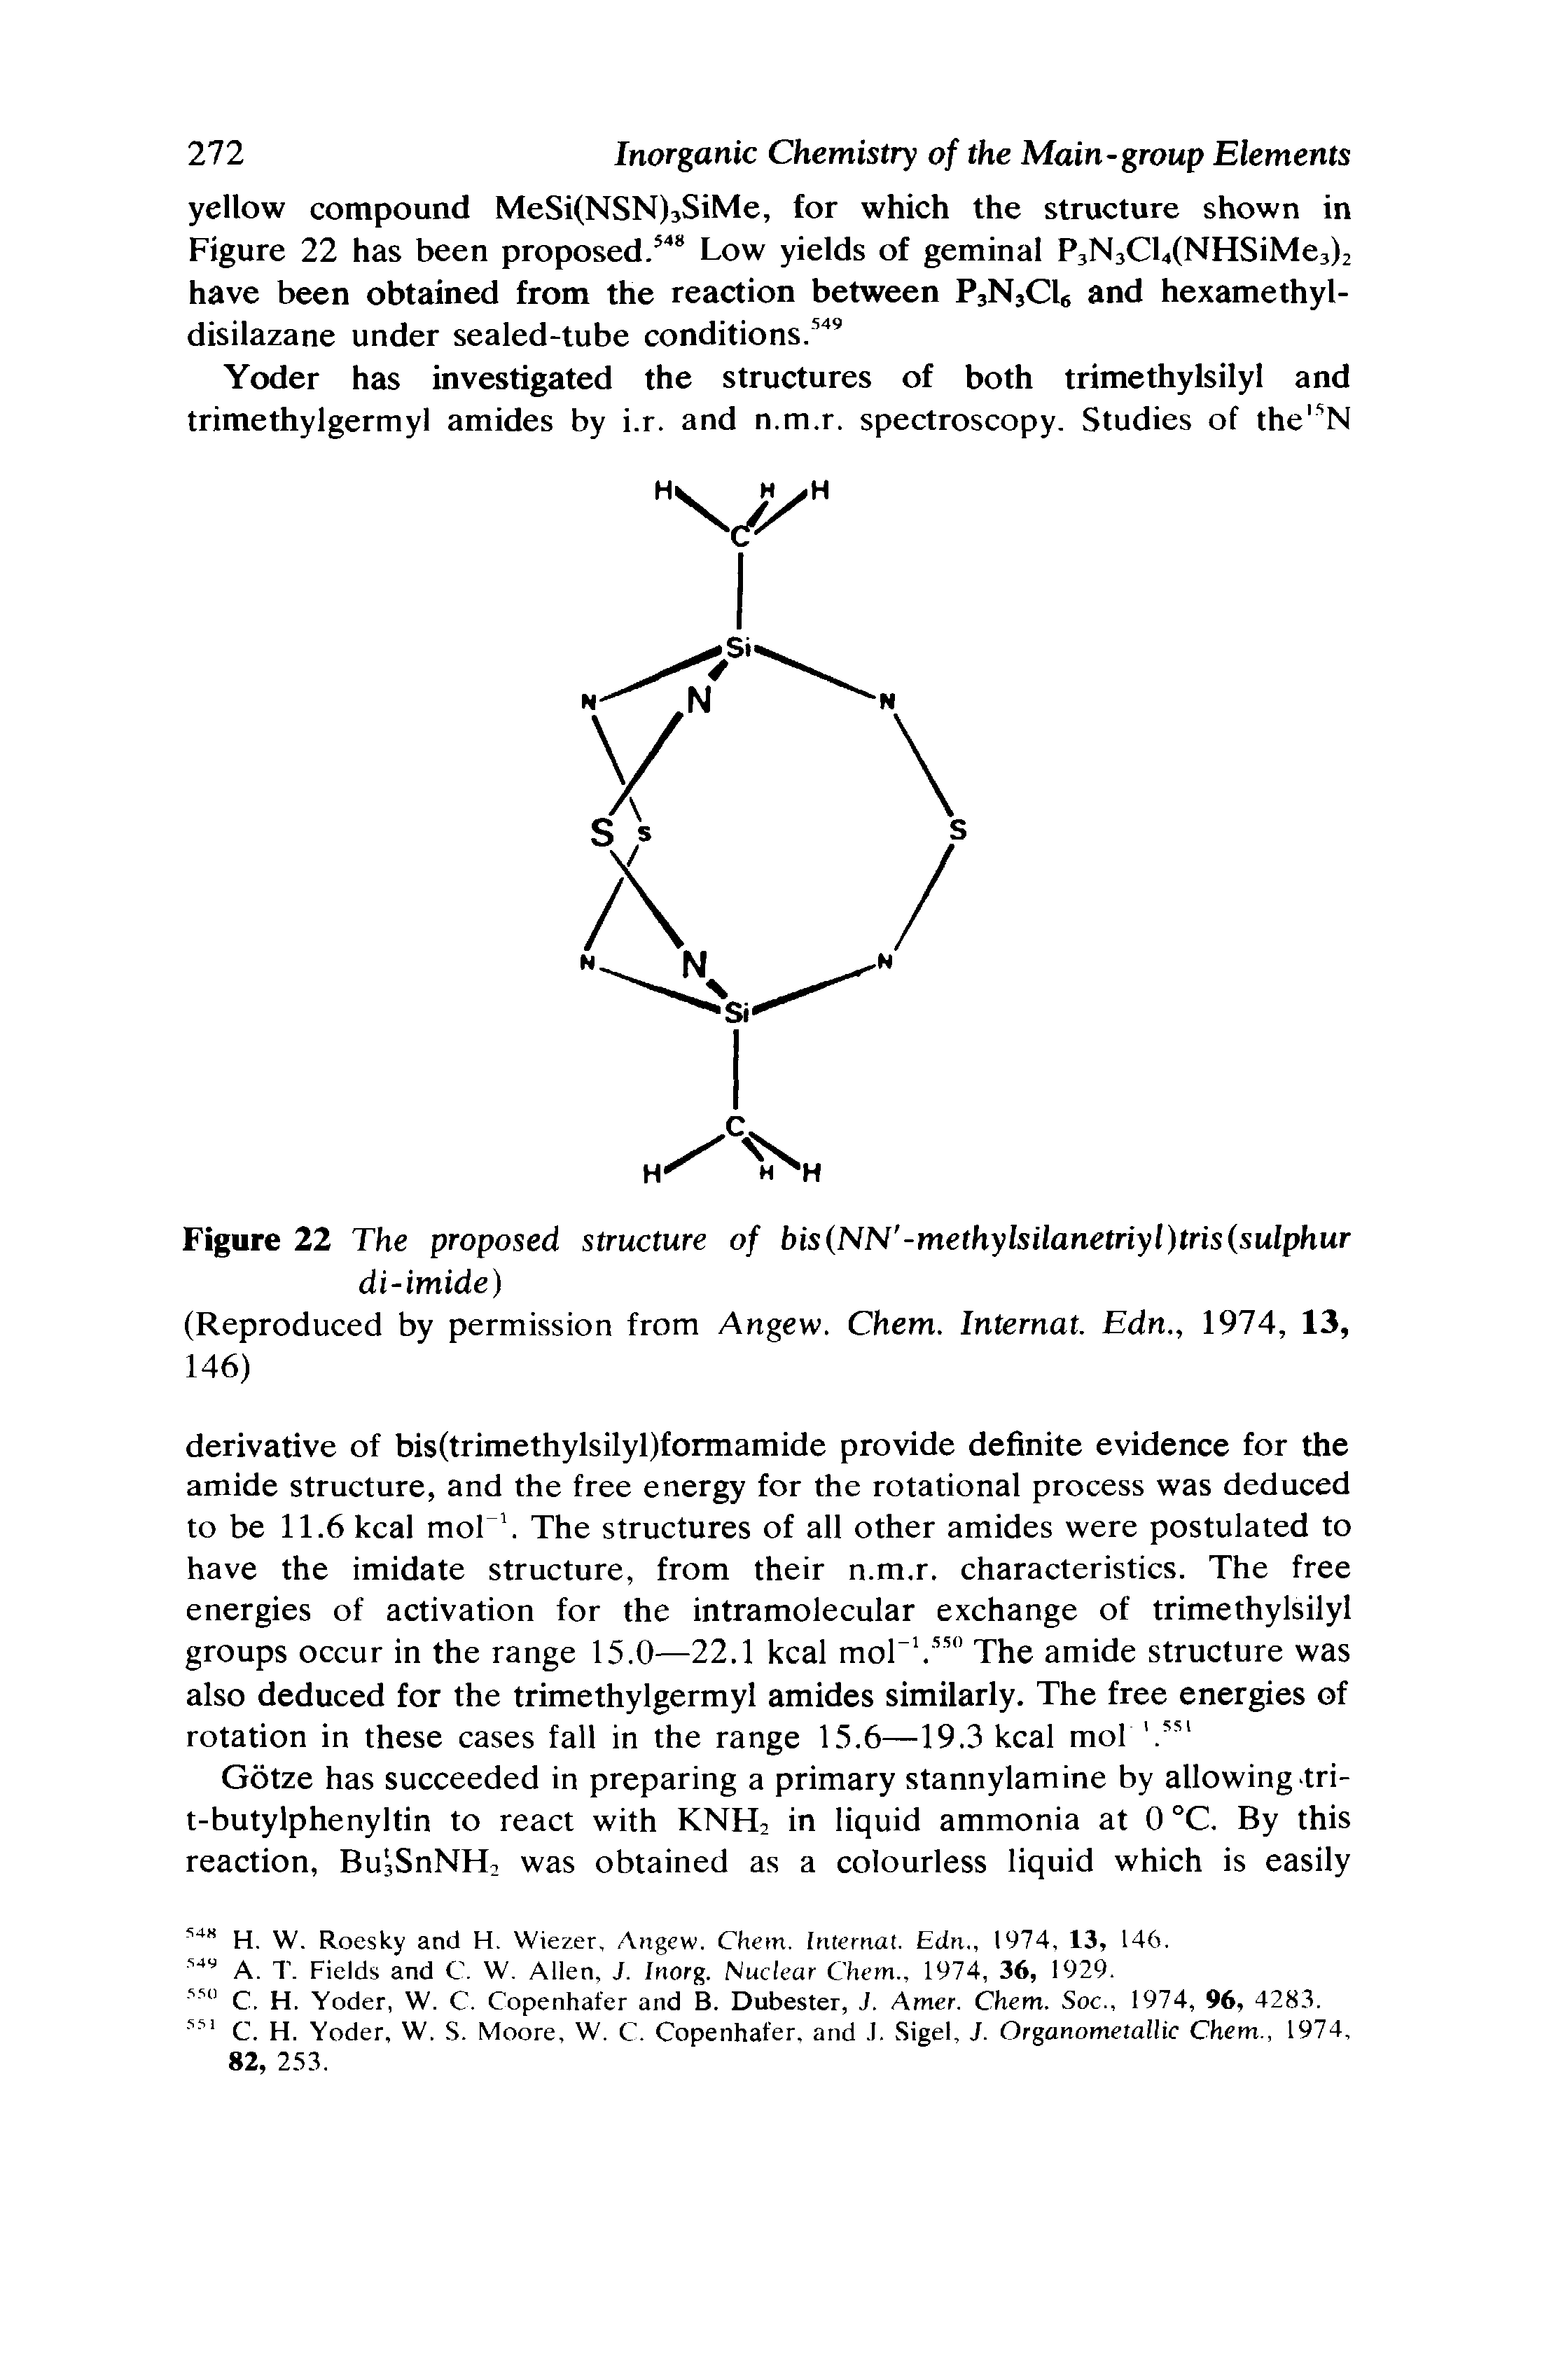 Figure 22 The proposed structure of bis(NN -methylsilanetriyl)tris(sulphur di-imide)...